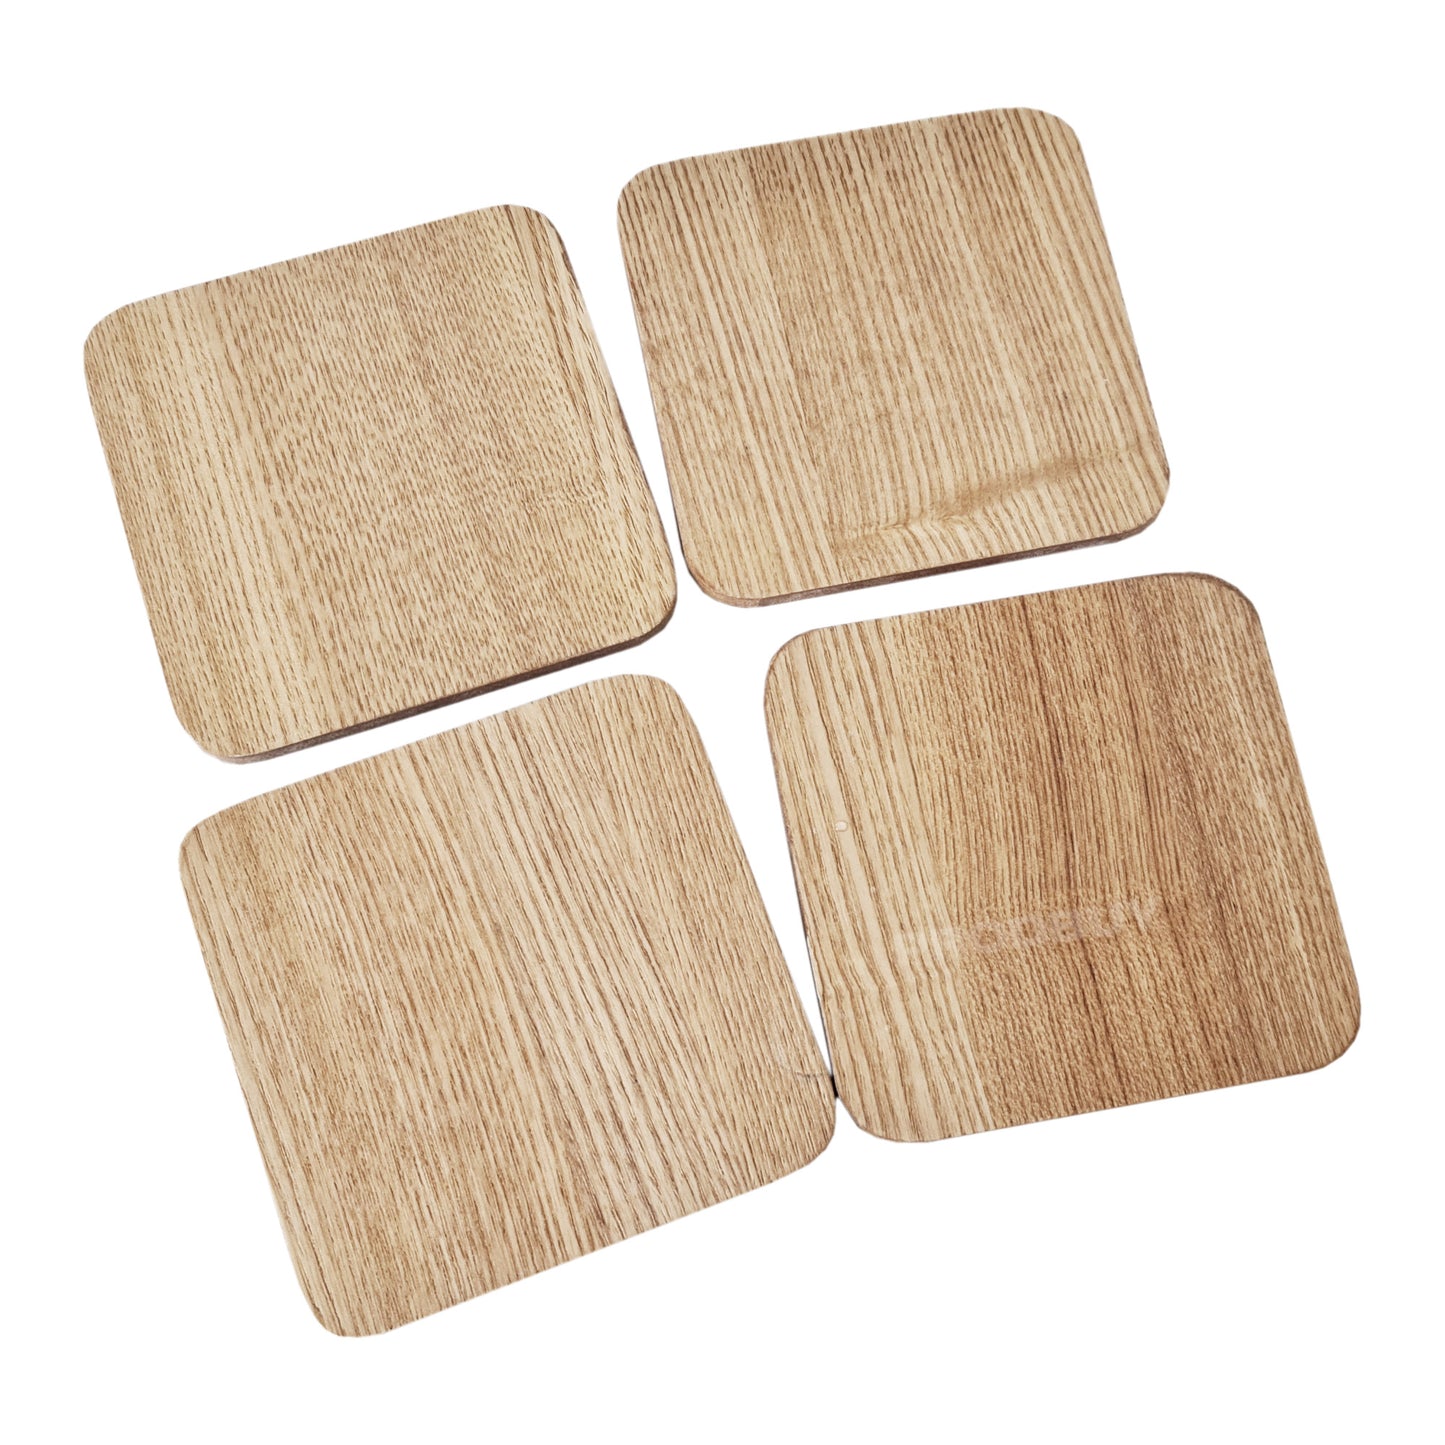 Set of 4 Placemats & 4 Coasters with Brown Wooden Oak Veneer